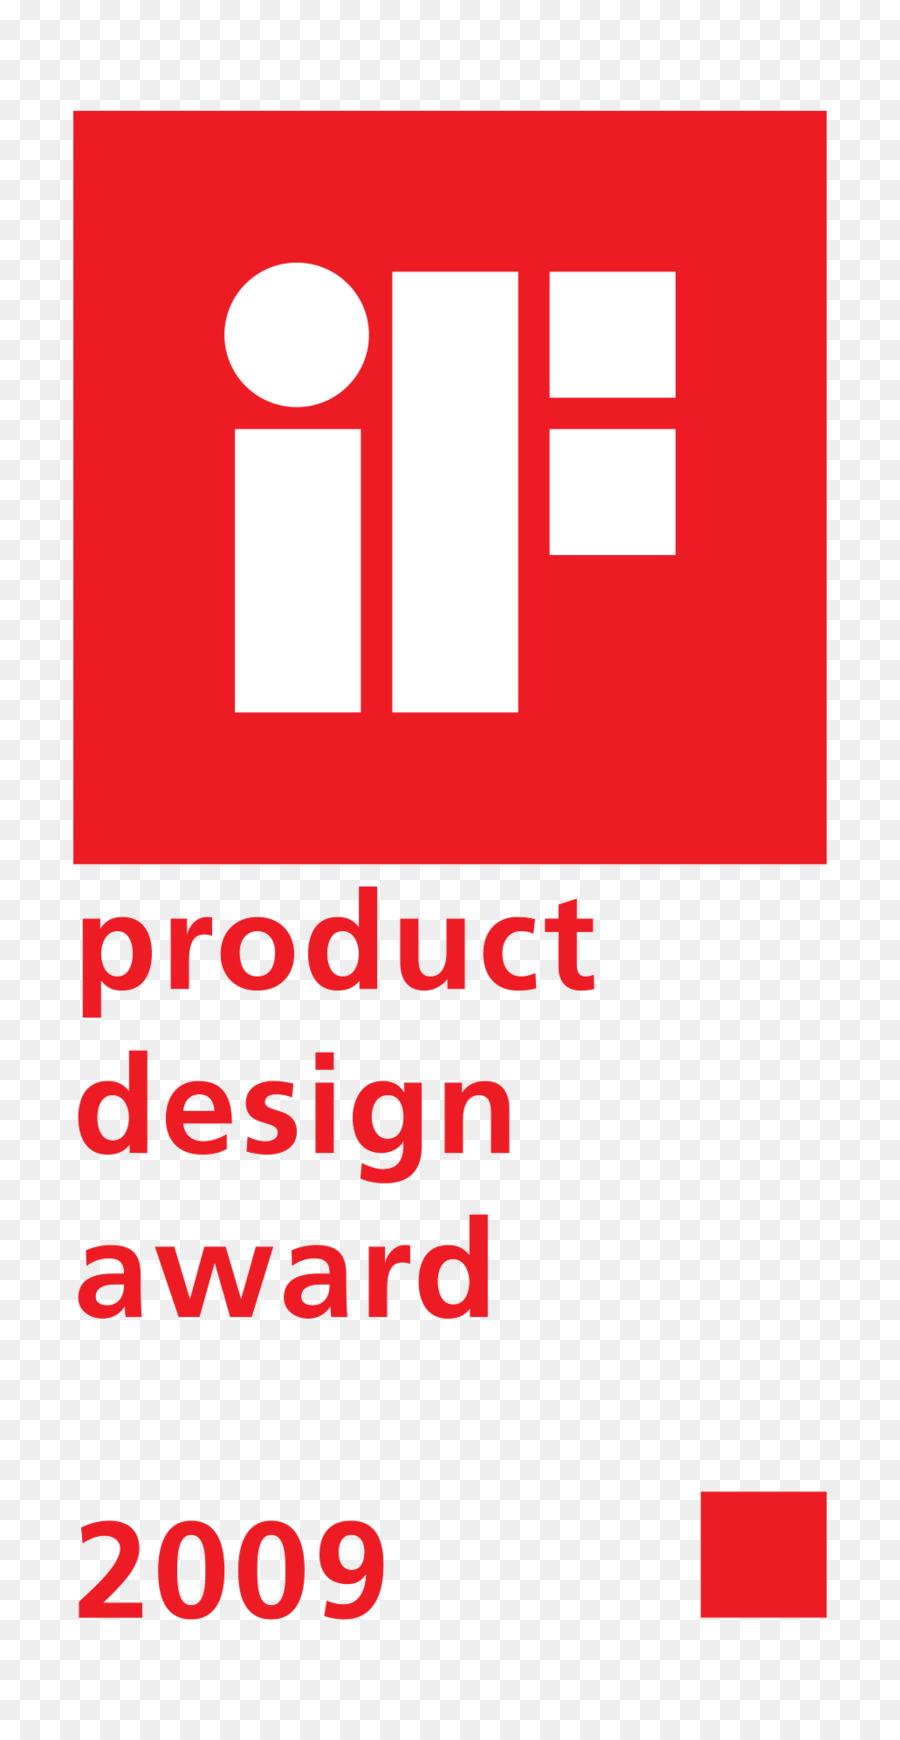 If Product Design Award Text